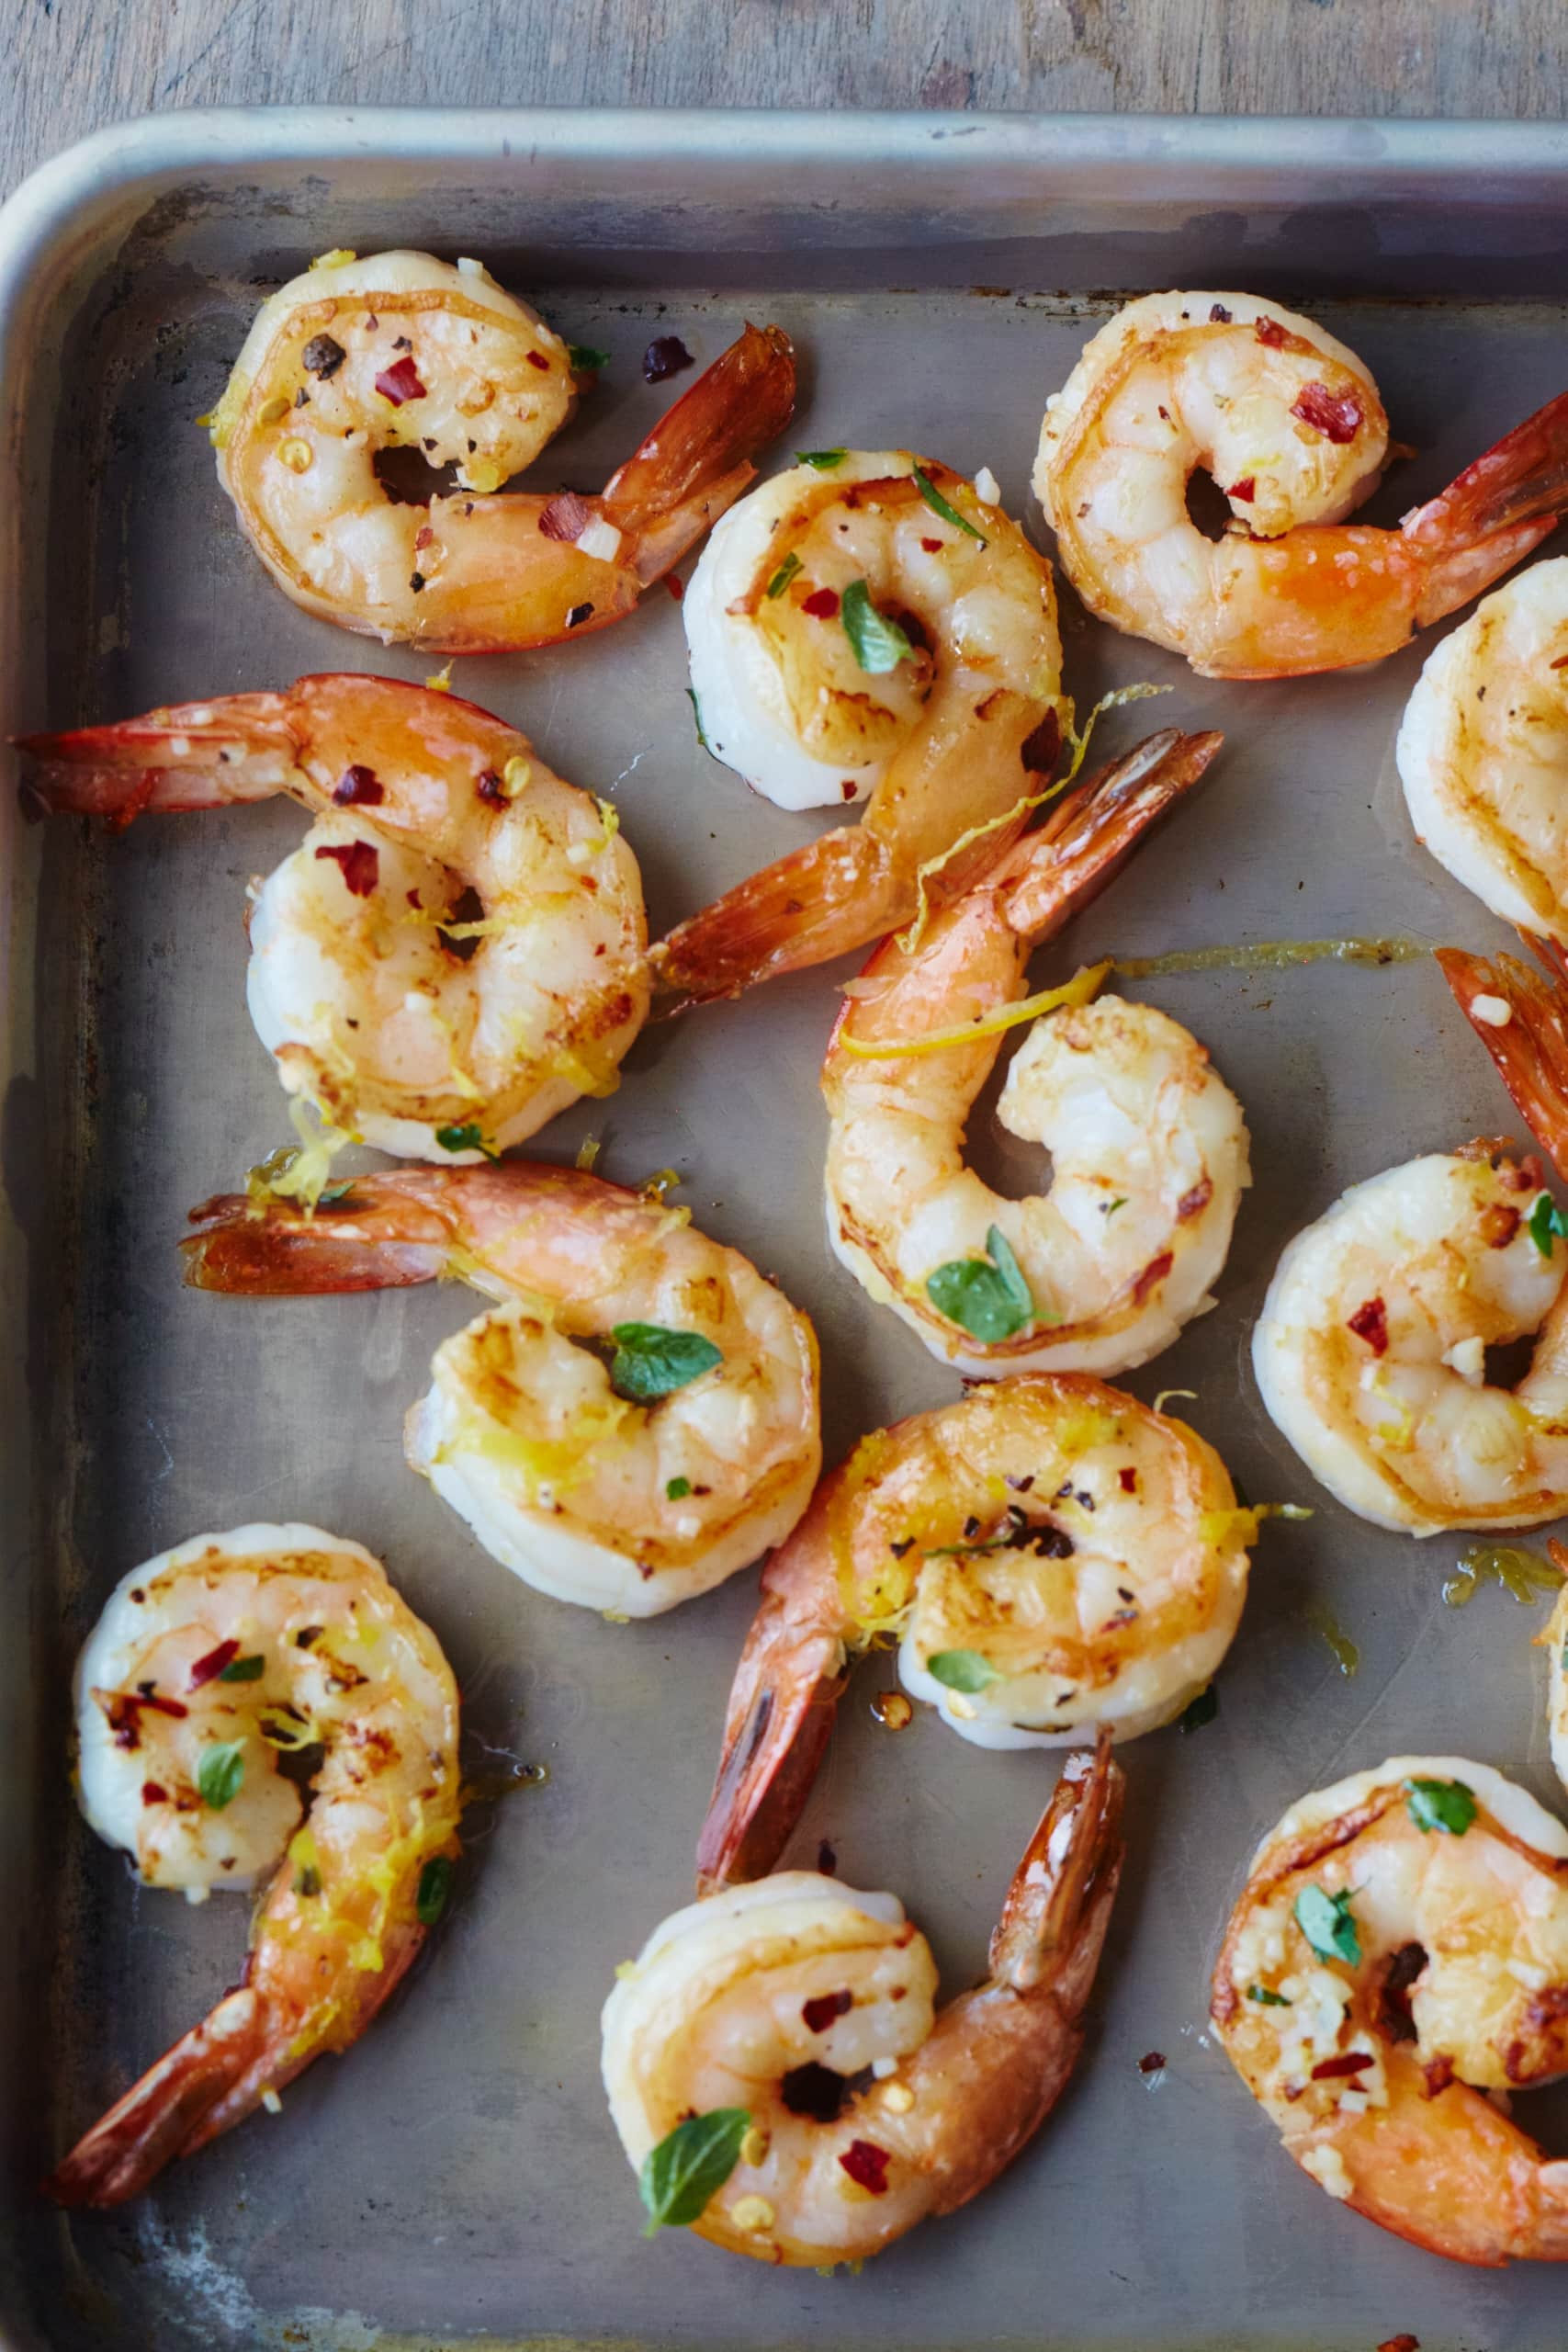 15 Great Side Dishes for Shrimp